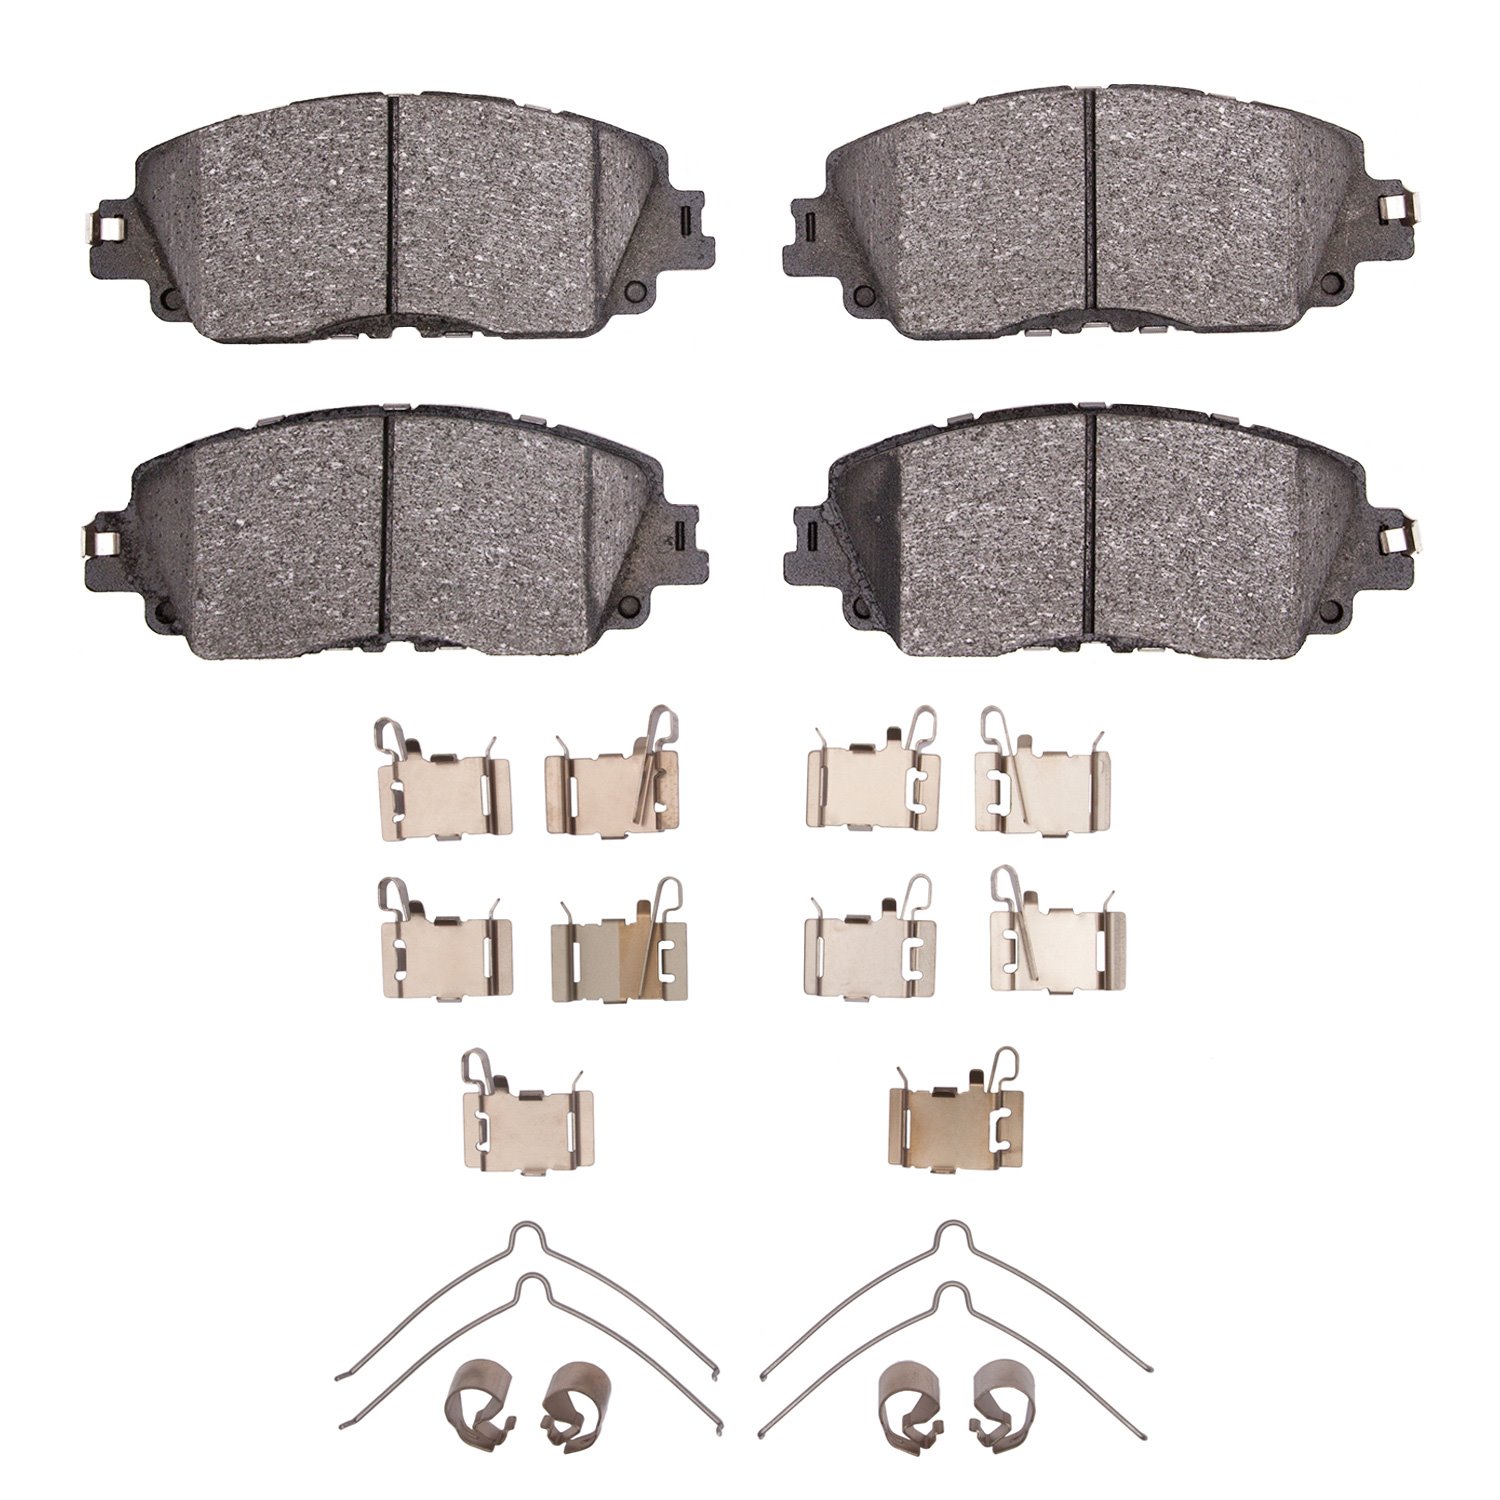 1310-2076-01 3000-Series Ceramic Brake Pads & Hardware Kit, Fits Select Lexus/Toyota/Scion, Position: Front